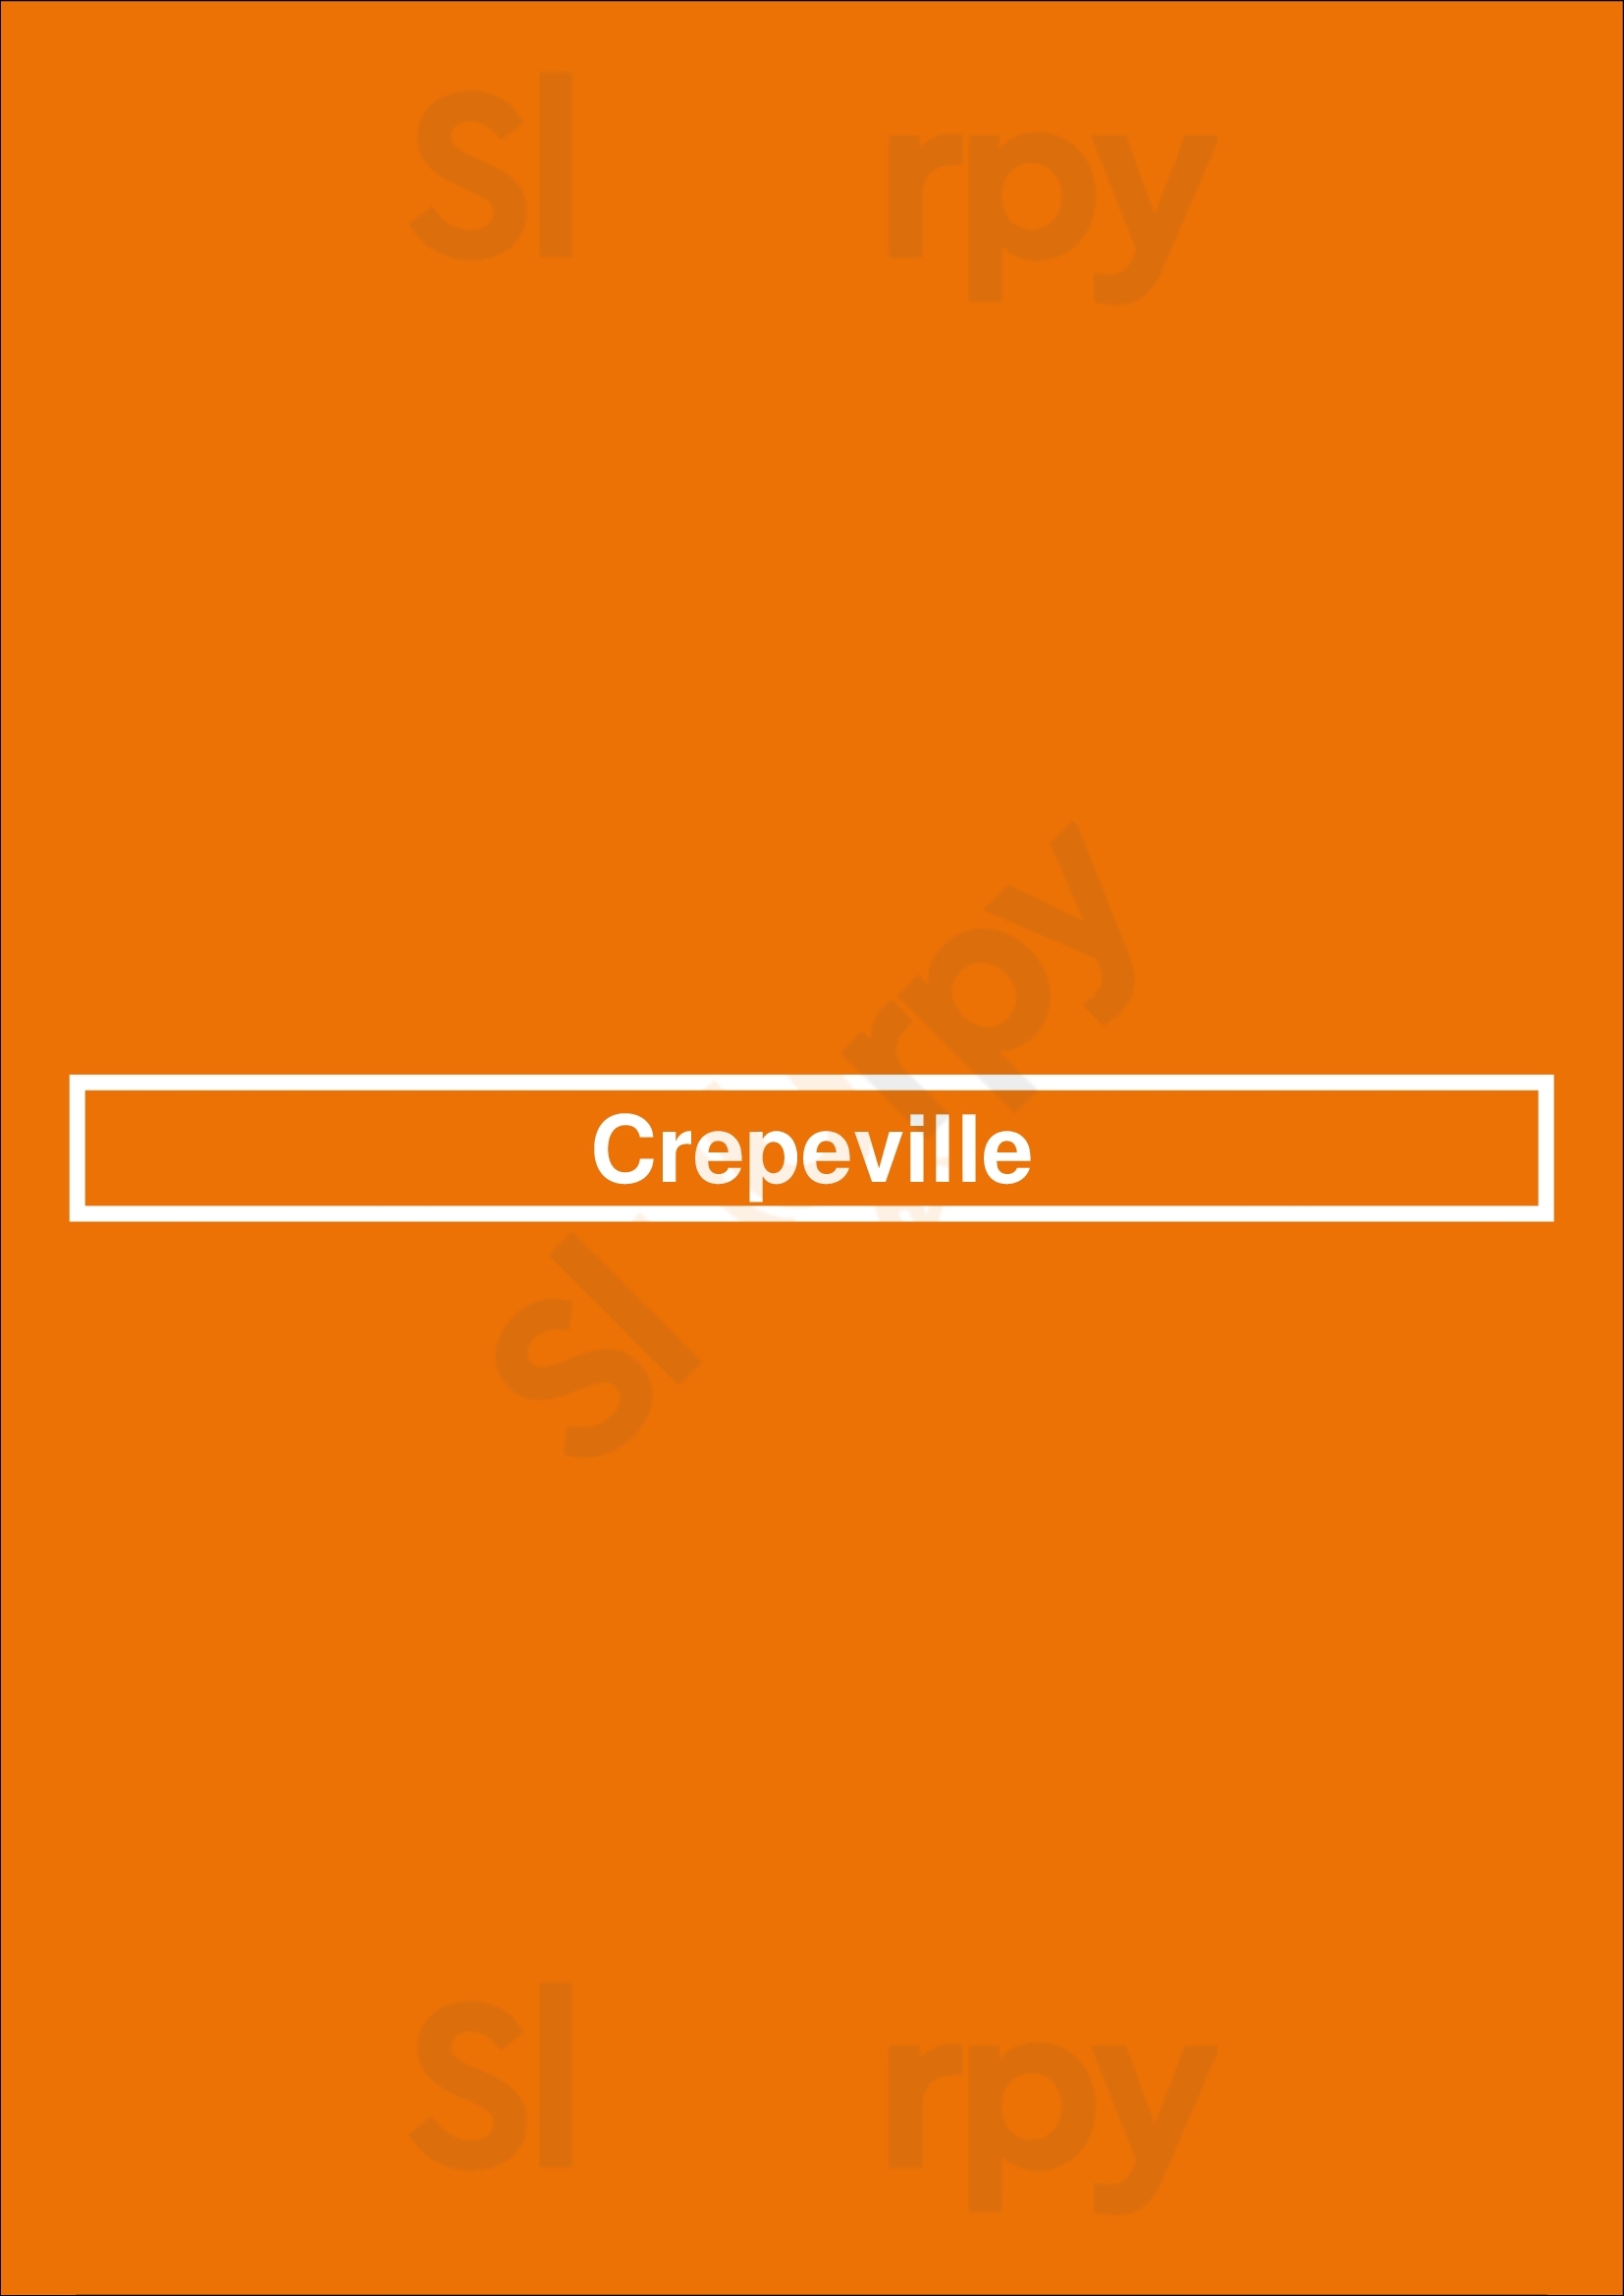 Crepeville Sacramento Menu - 1